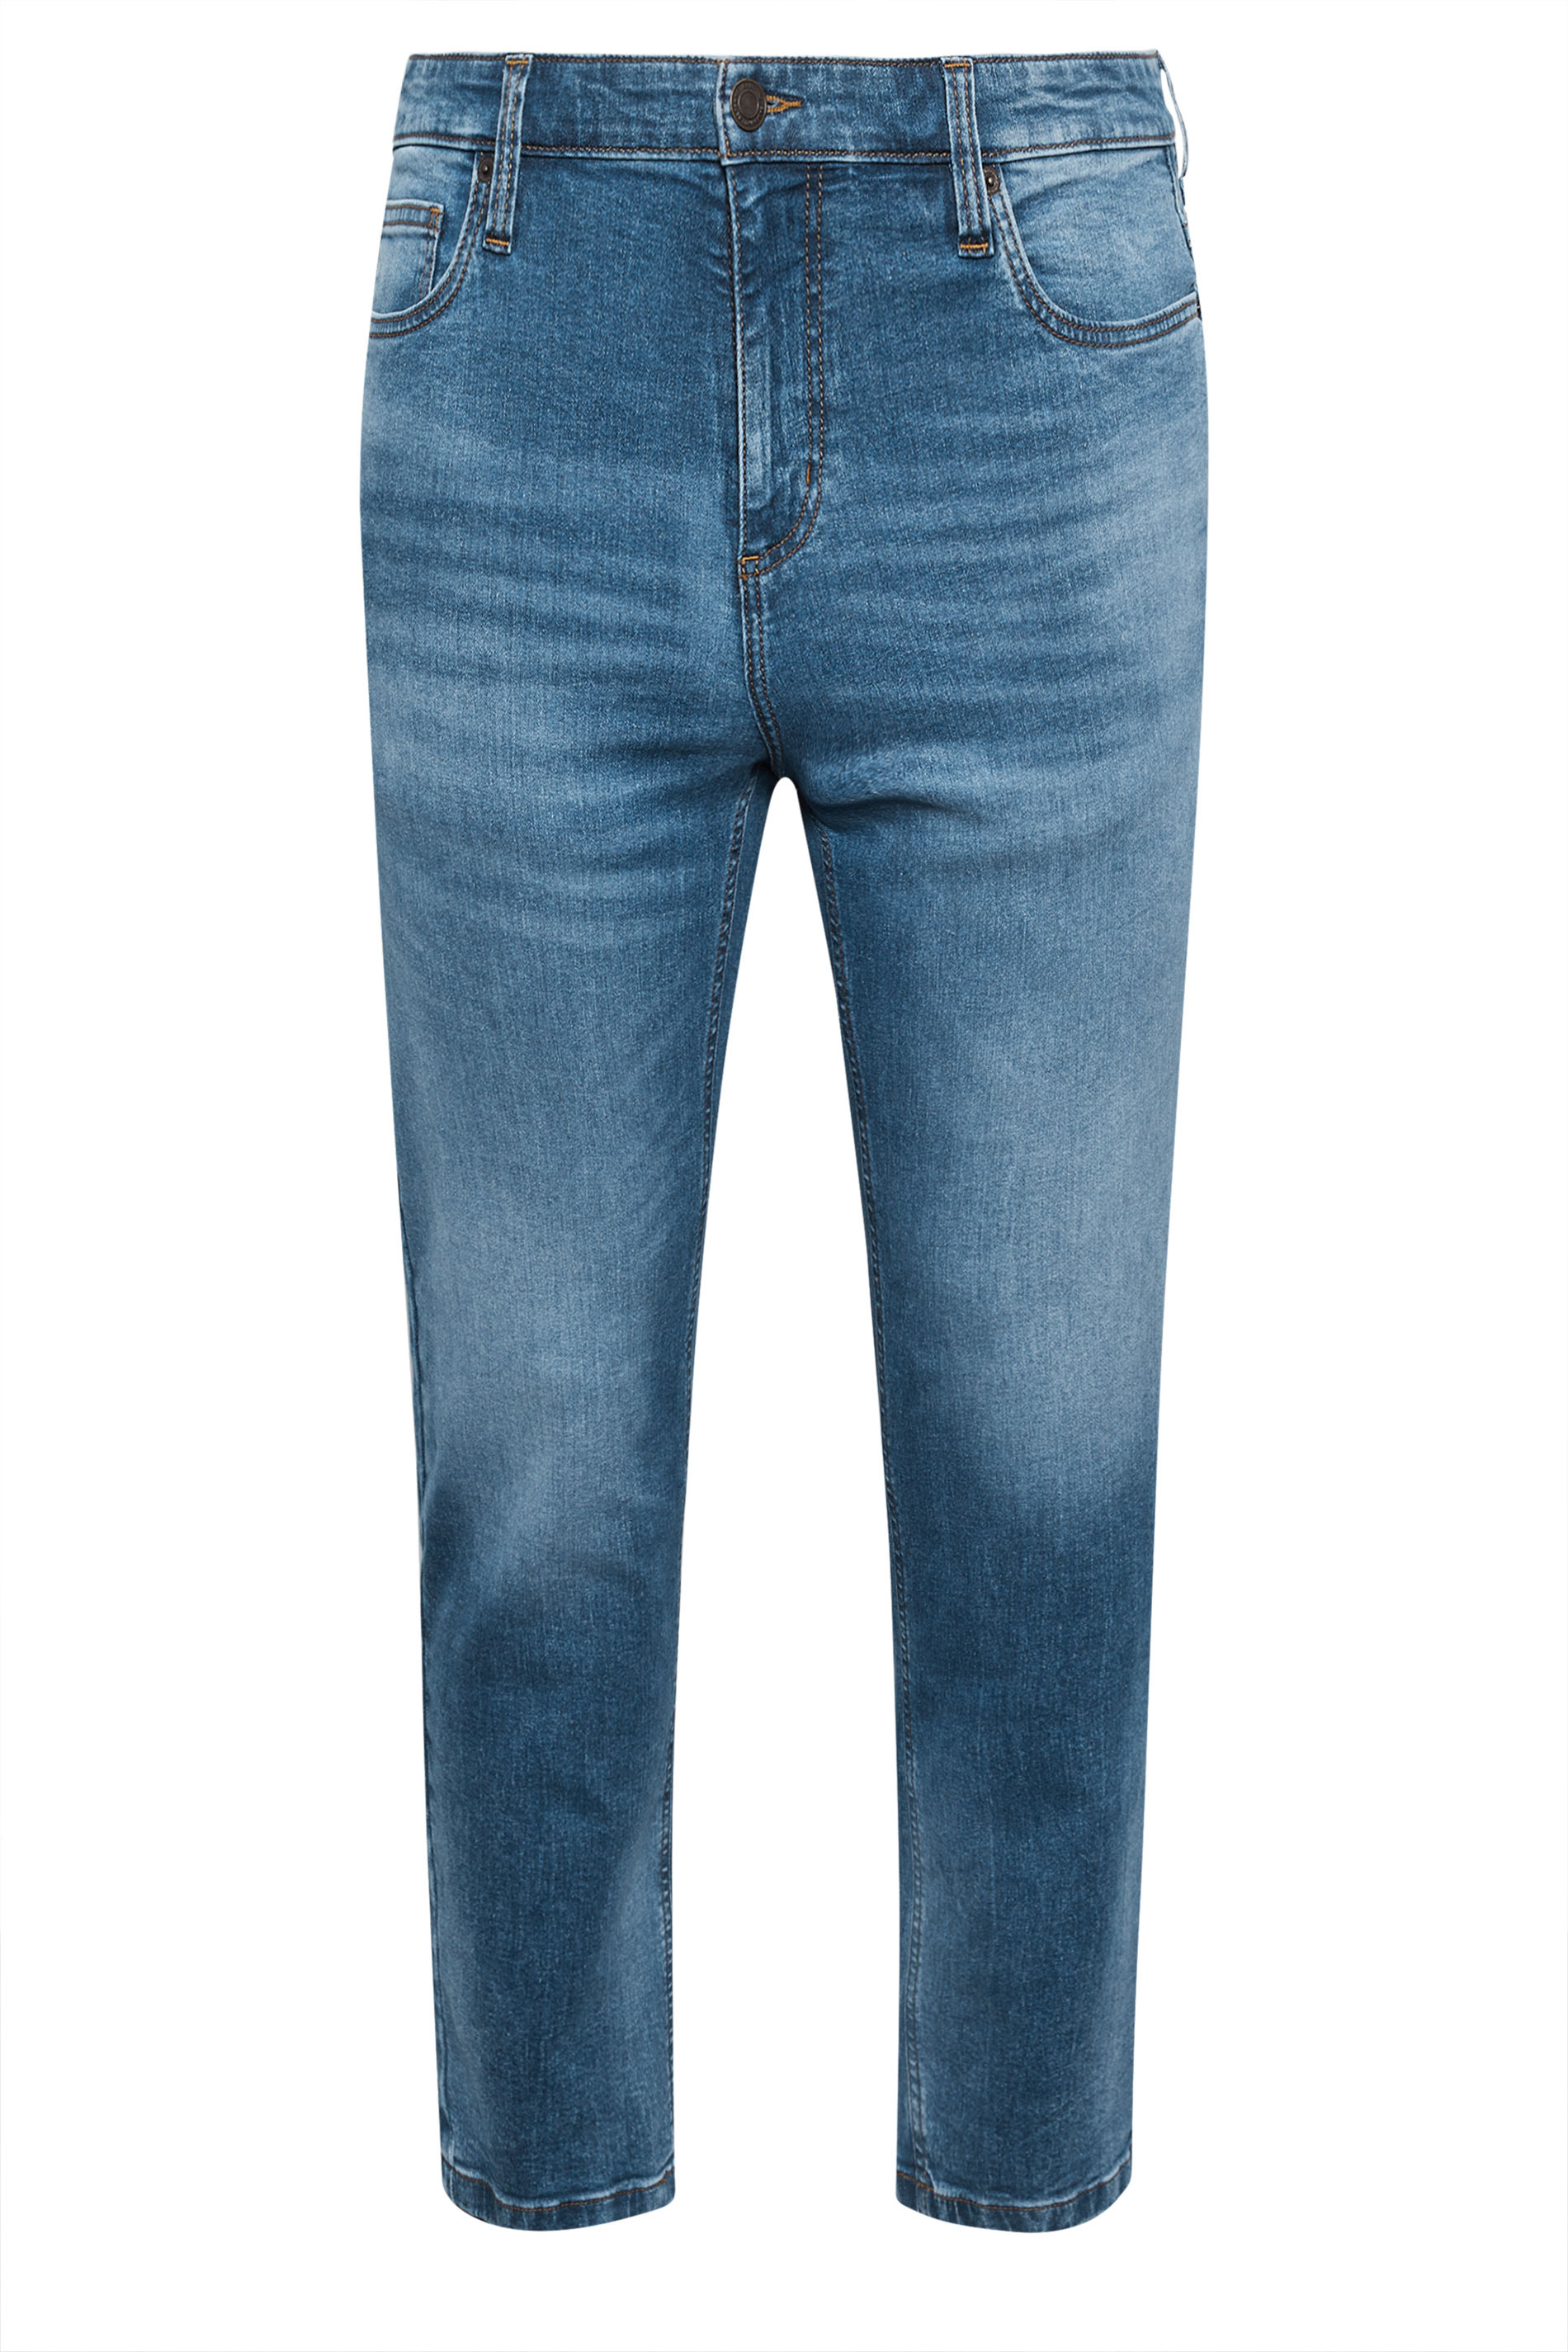 BadRhino Big & Tall Blue Washed Denim Stretch Jeans | BadRhino 3